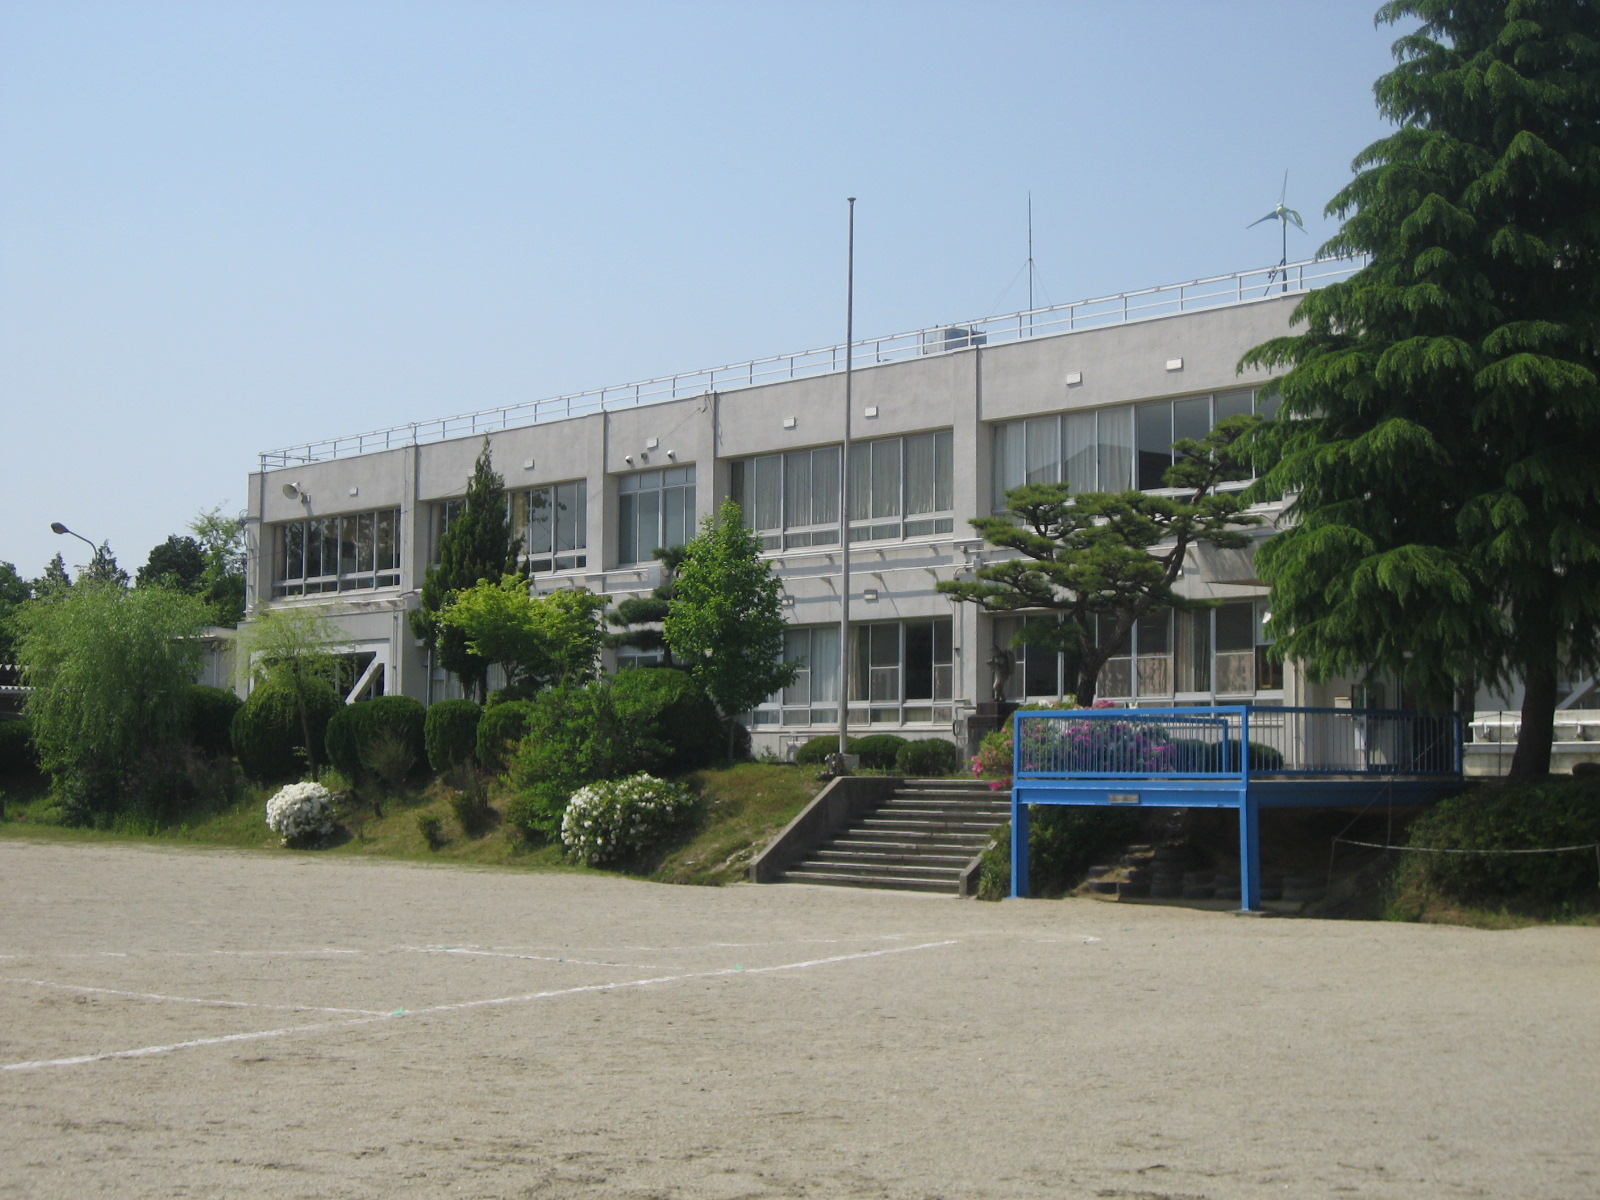 Primary school. Tajimi Tatsuminamihime to elementary school (elementary school) 1165m